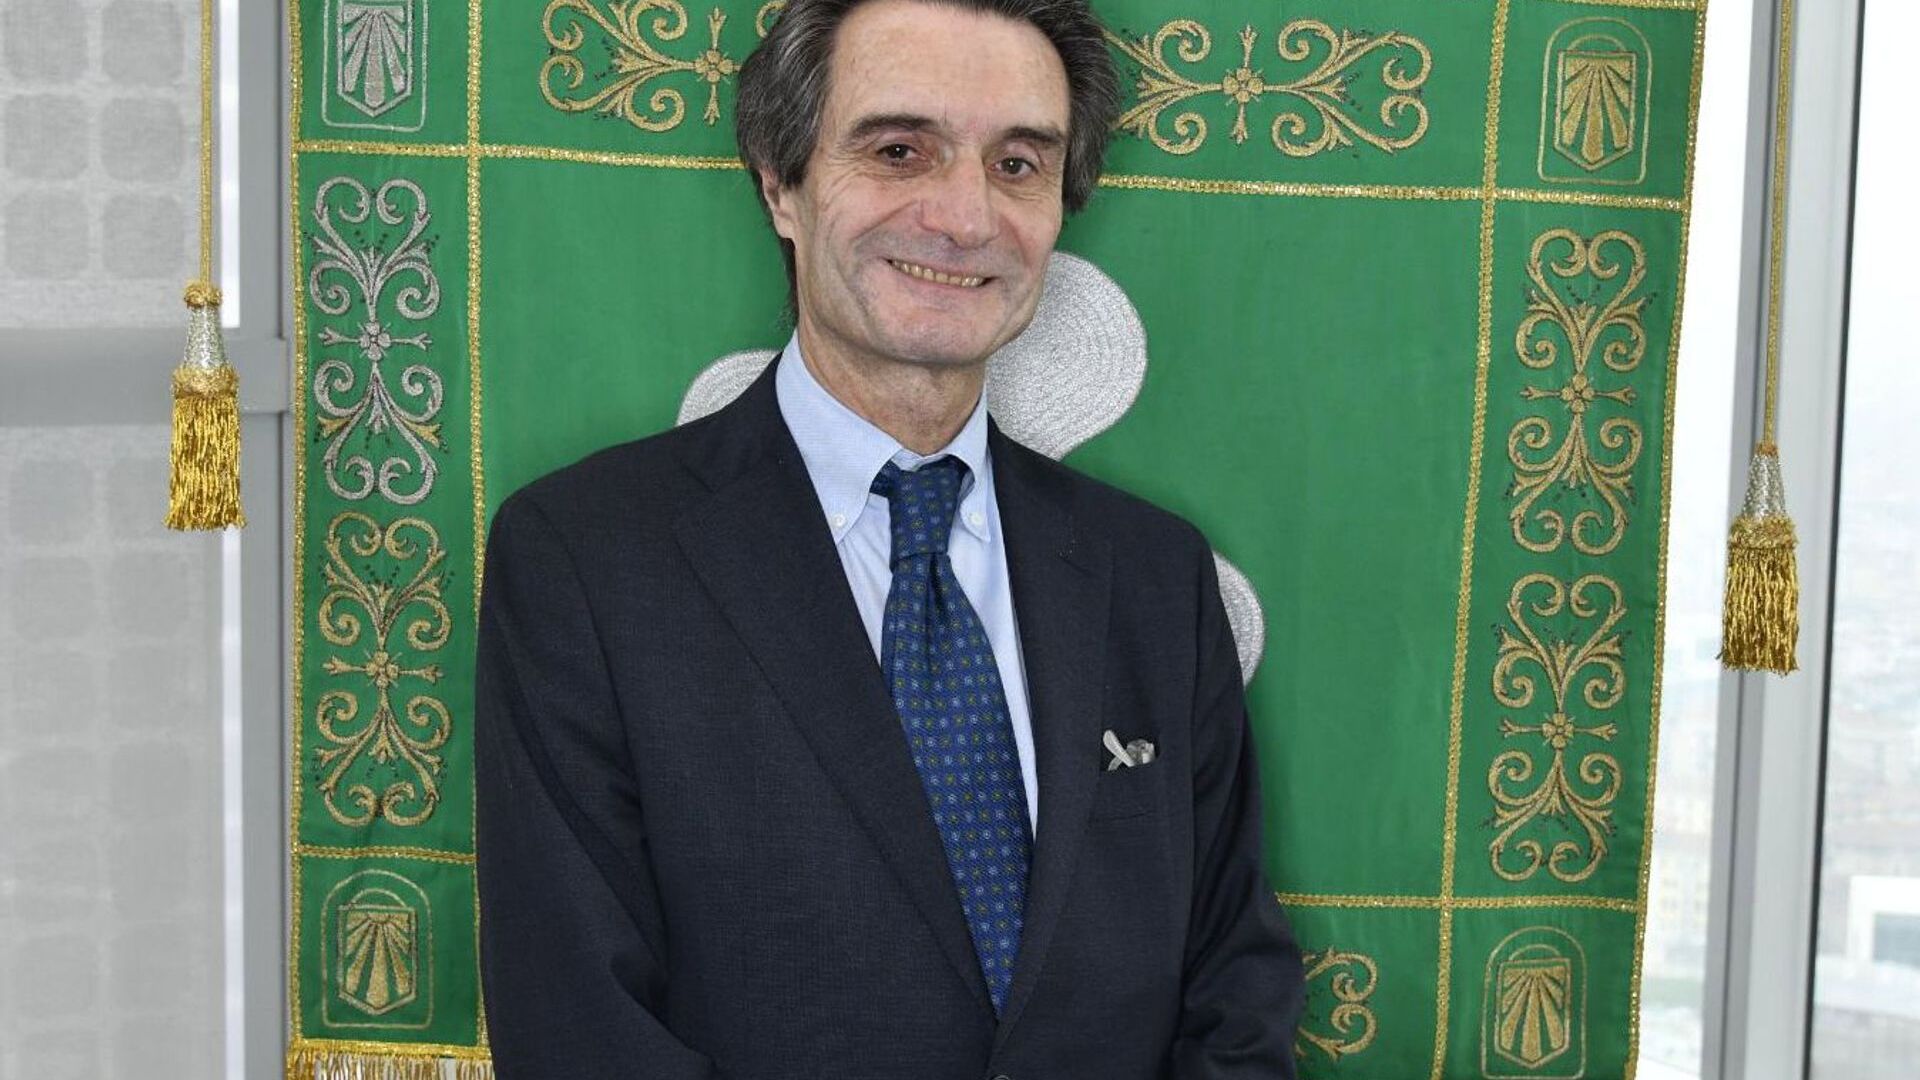 Attilio Fontana ist Präsident der Region Lombardei